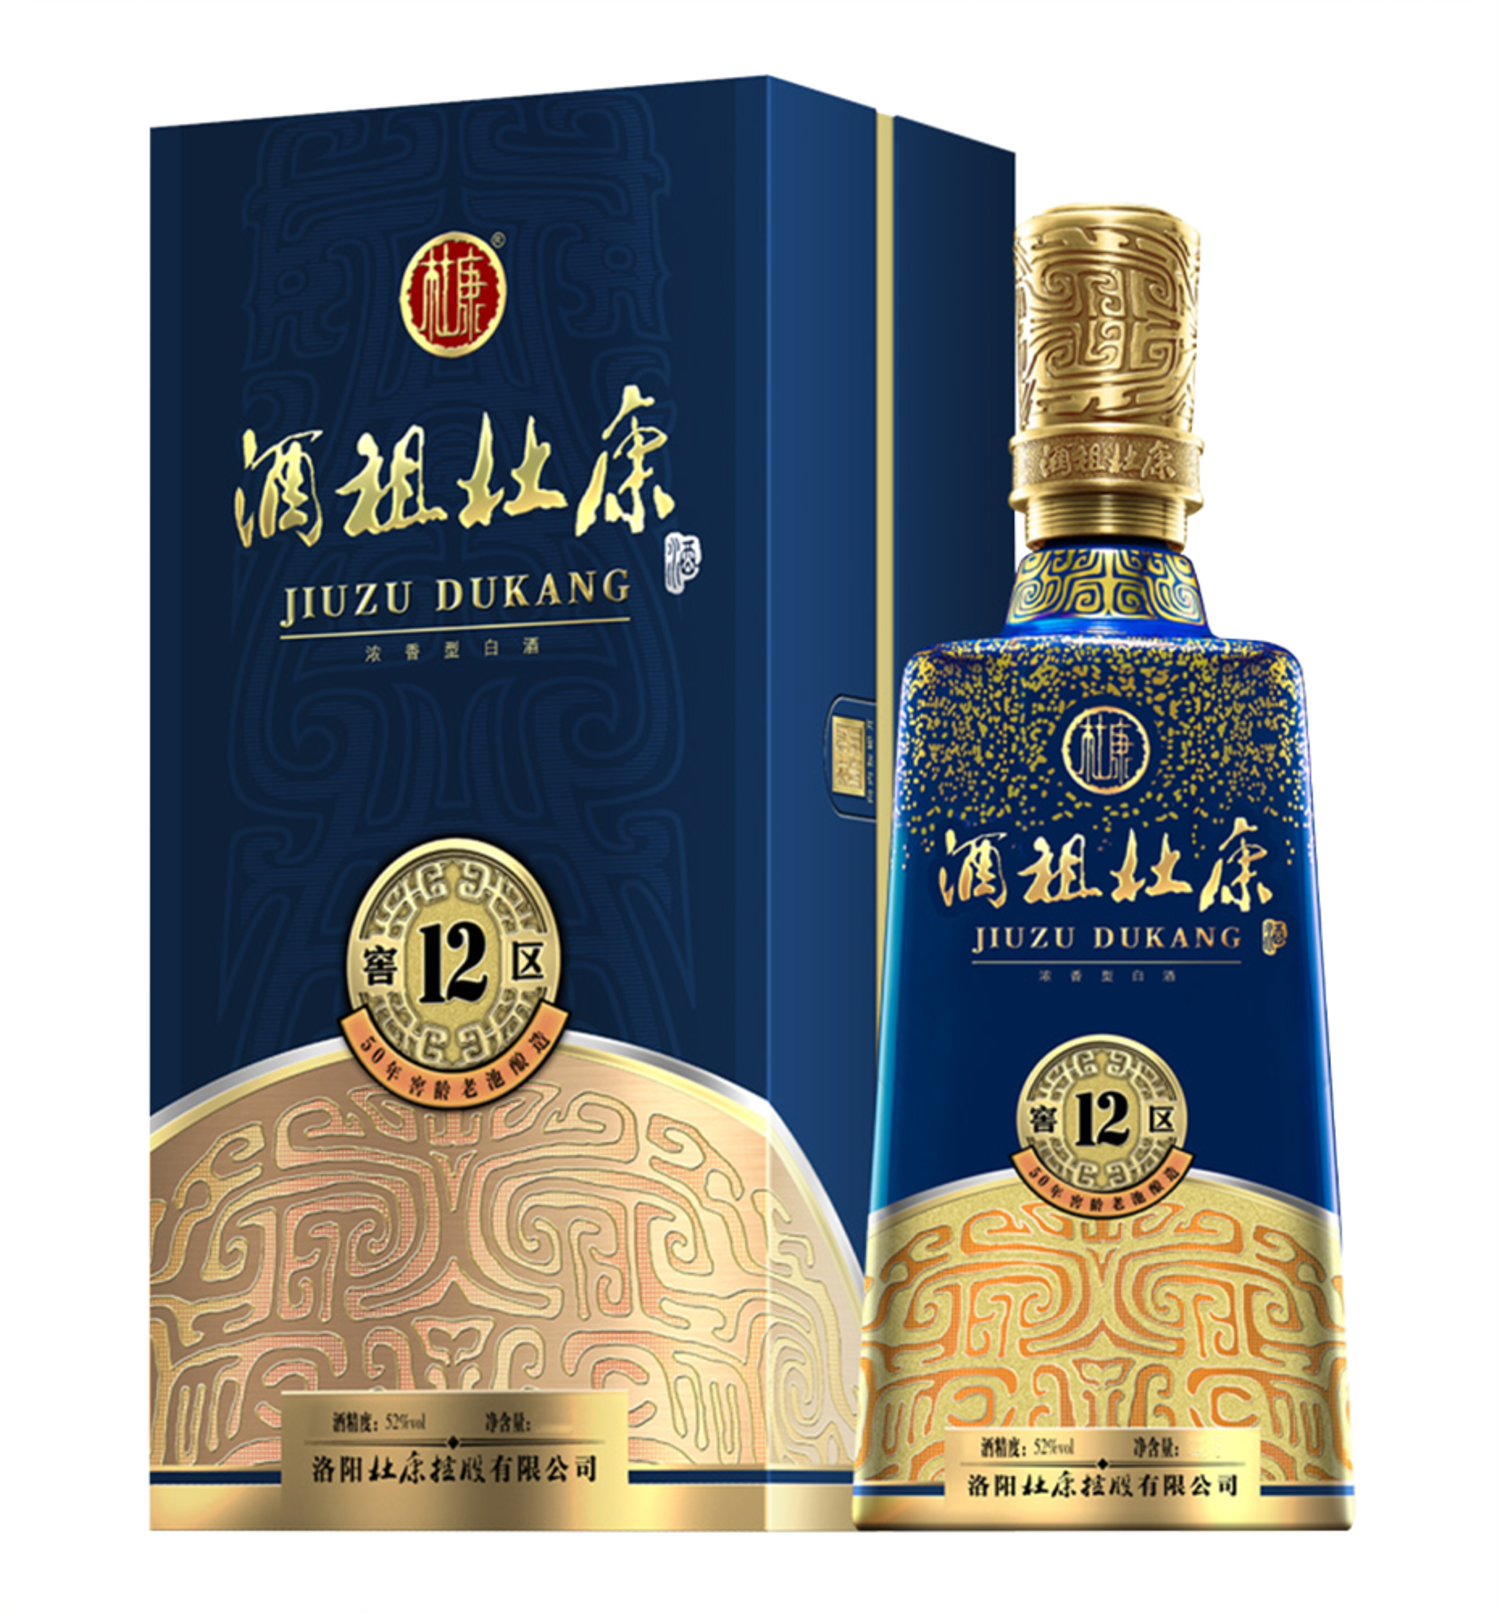 Jiuzu Dukang 12 Cellar Blue 酒祖杜康12窖蓝盒375ml $58 - Uncle 